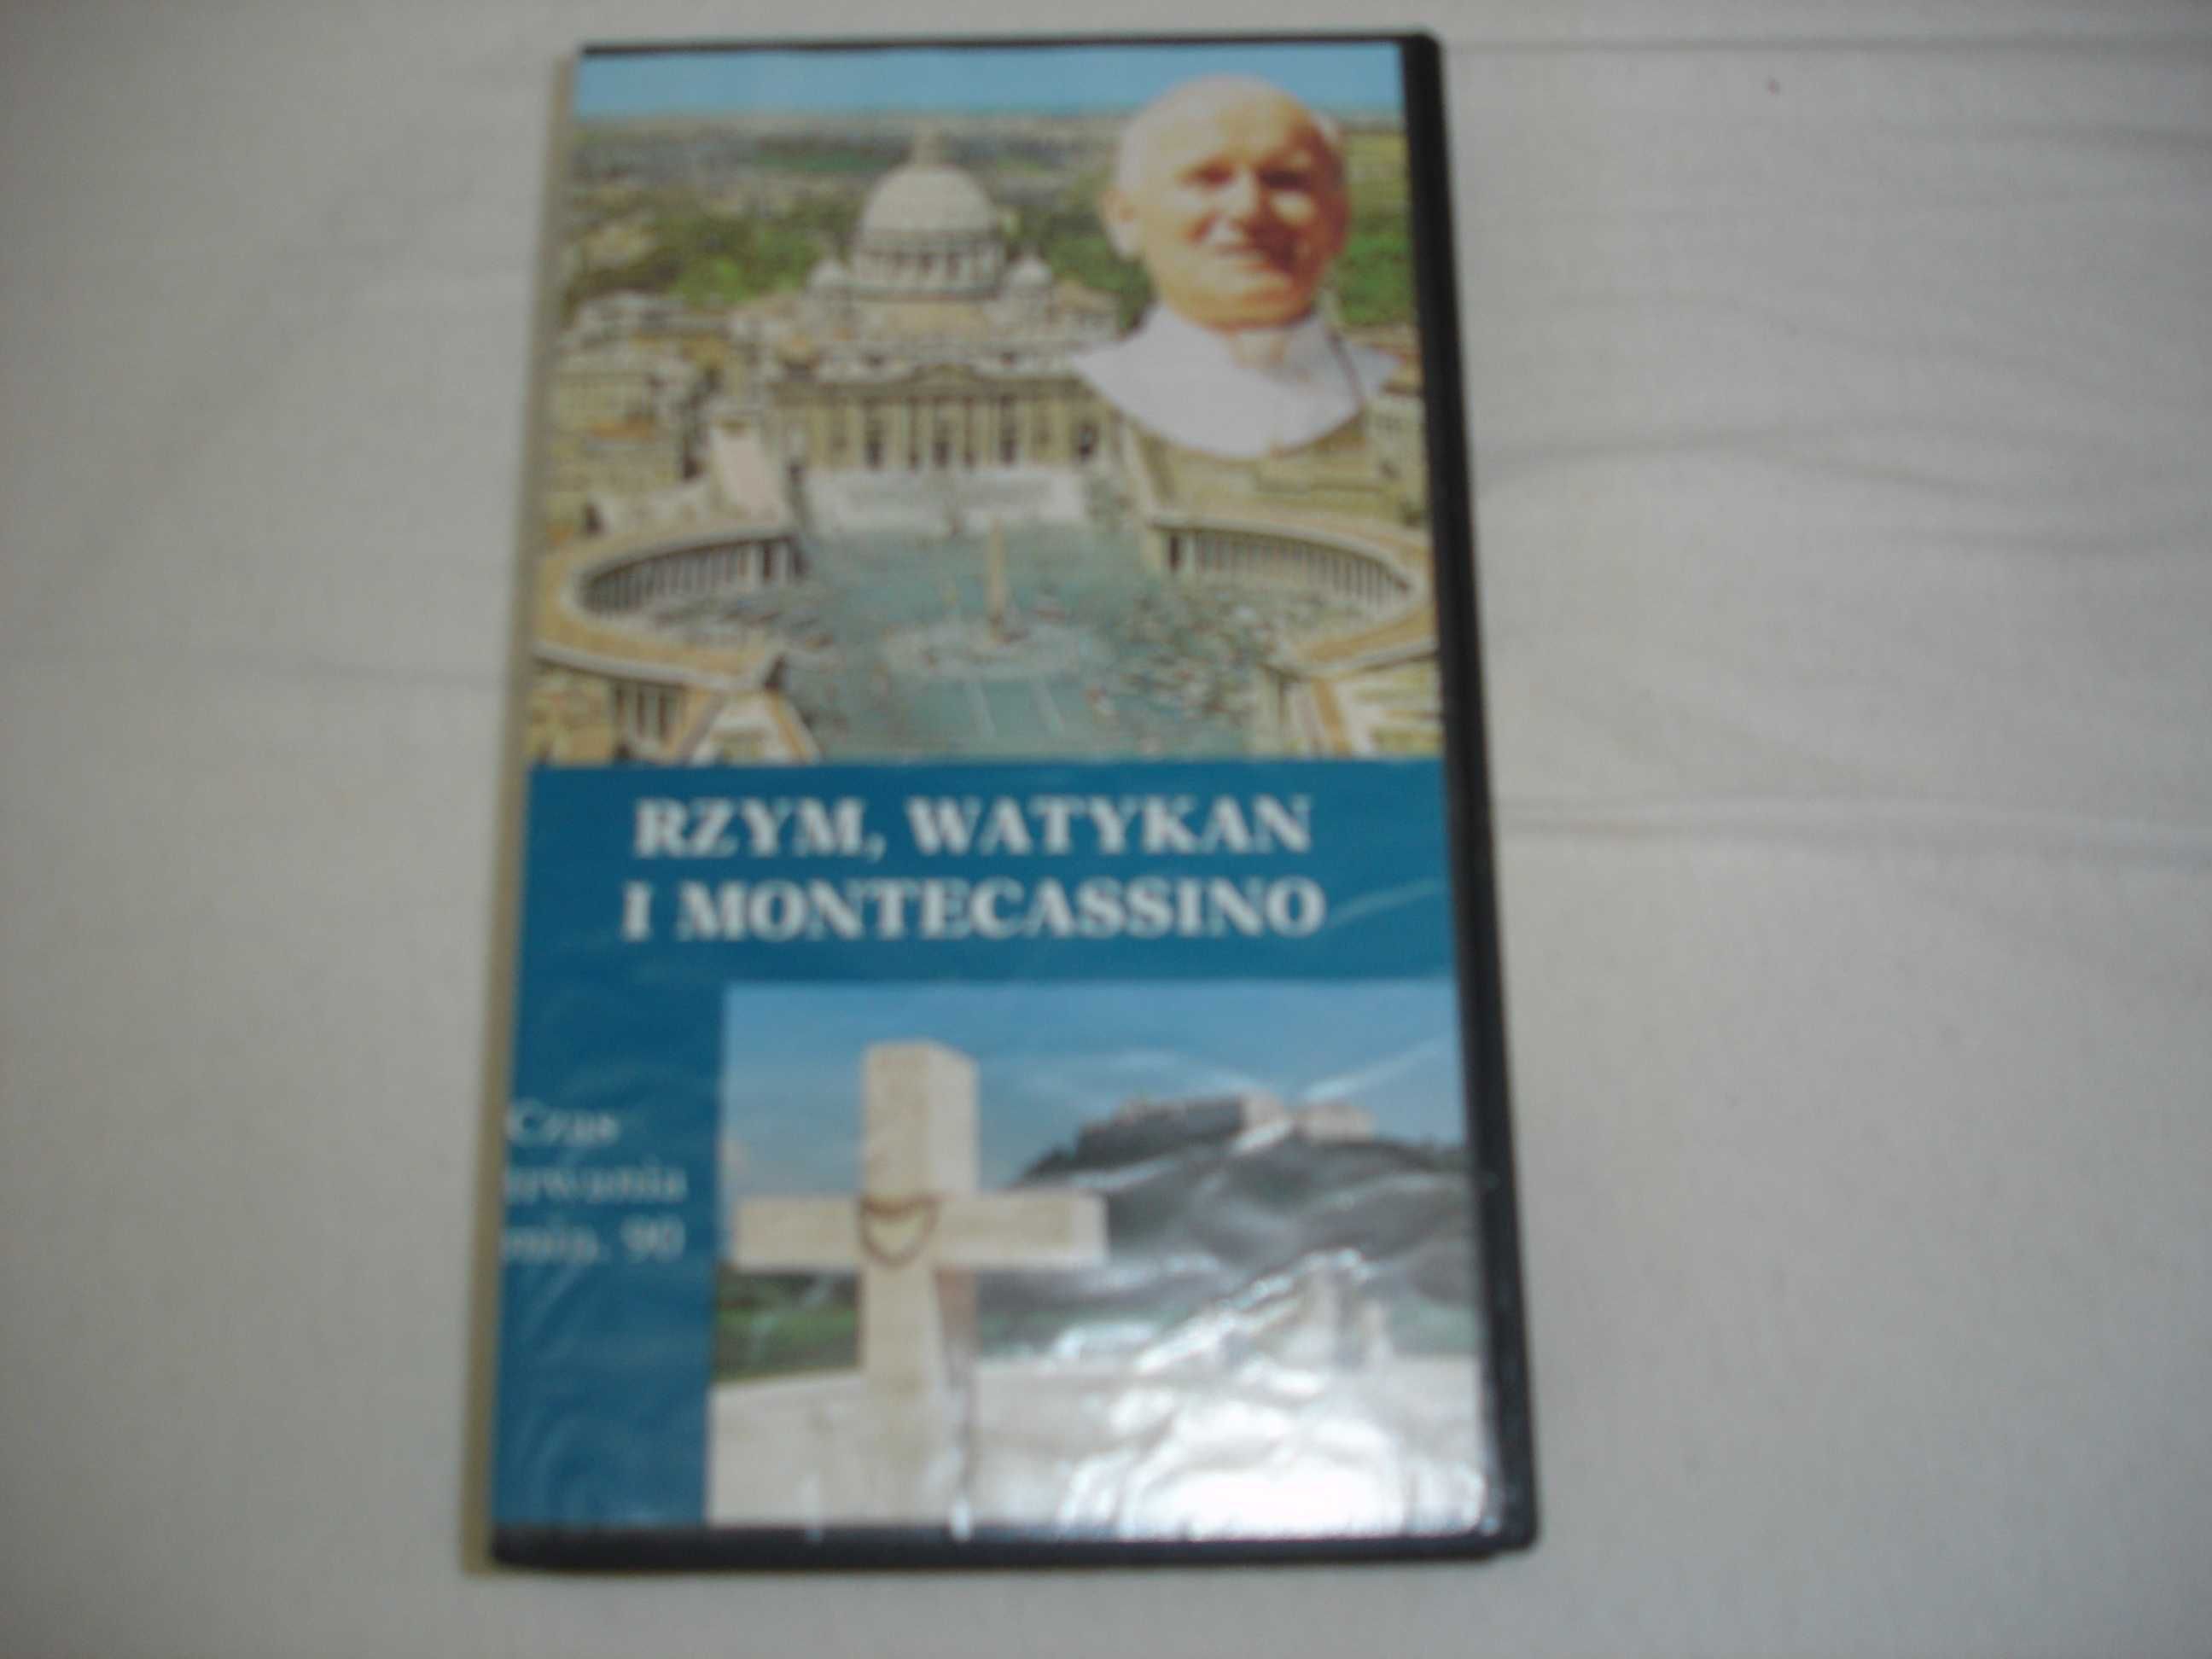 Rzym , Watykan i Monte Cassino - film dokumentalny na kasecie VHS